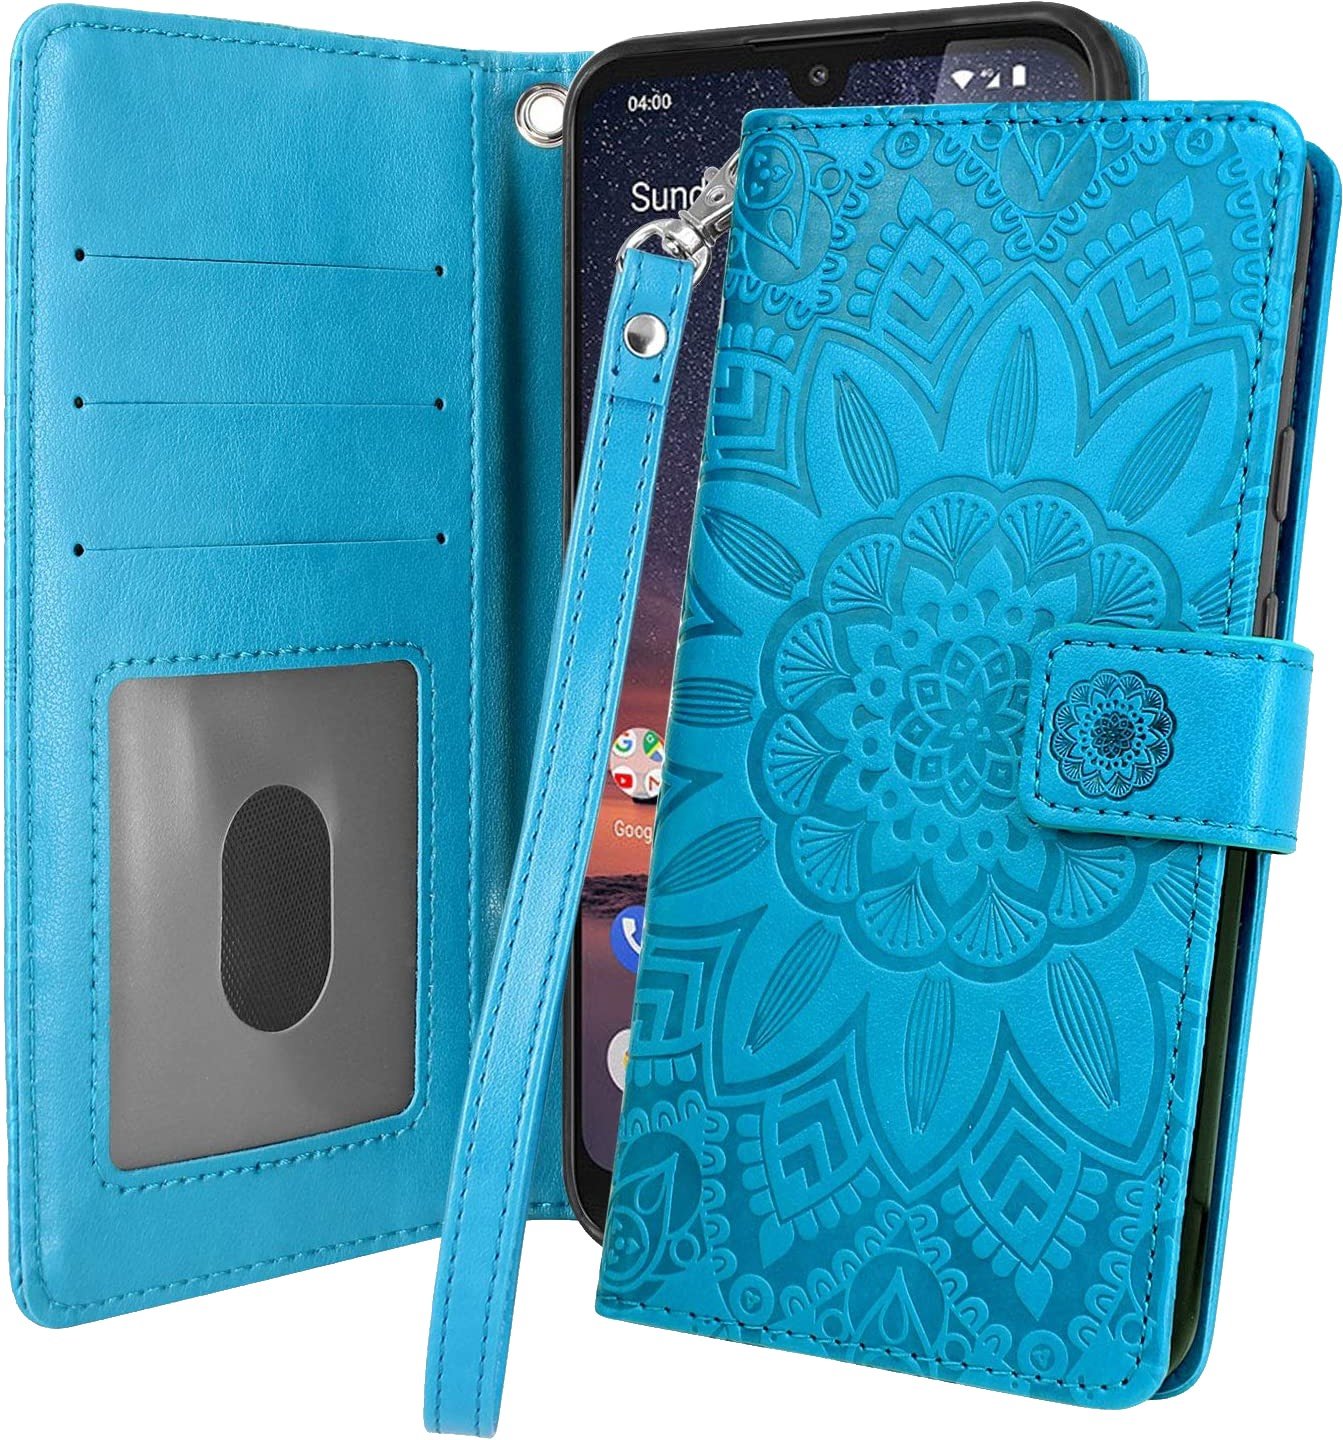 Harryshell Wallet Case Nokia 3 2 Render